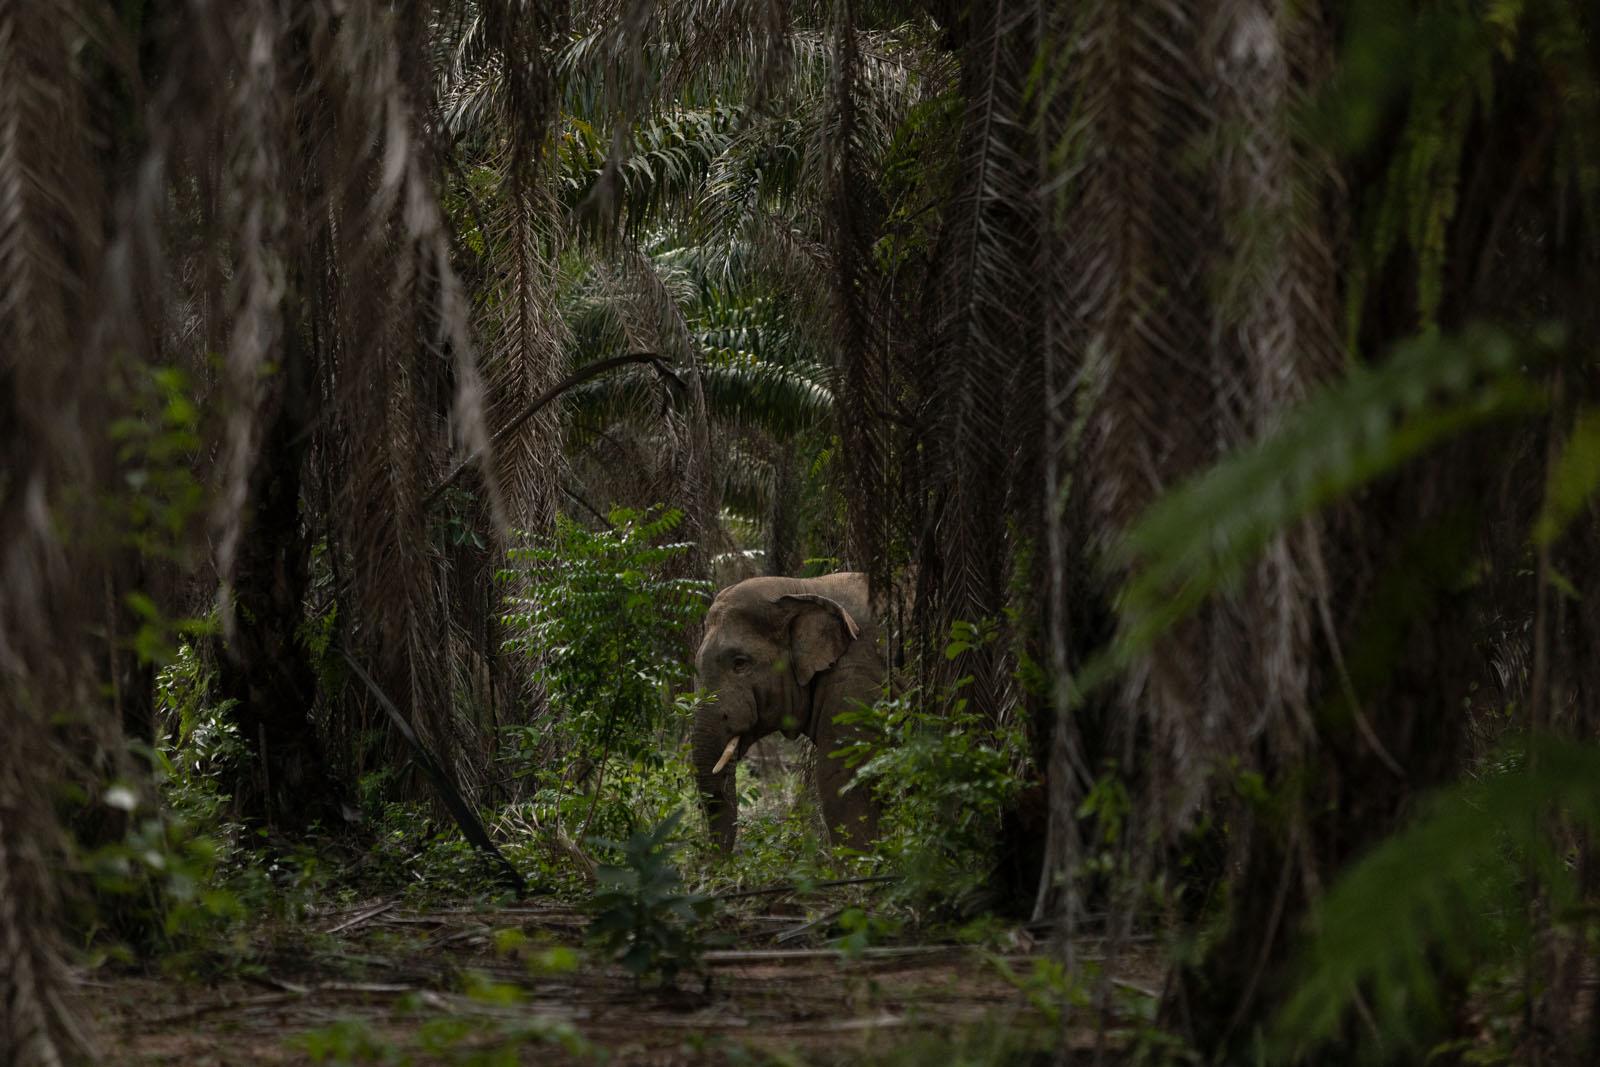 A FRAGILE COEXISTENCE - A male wild elephant walks through a palm plantation on...